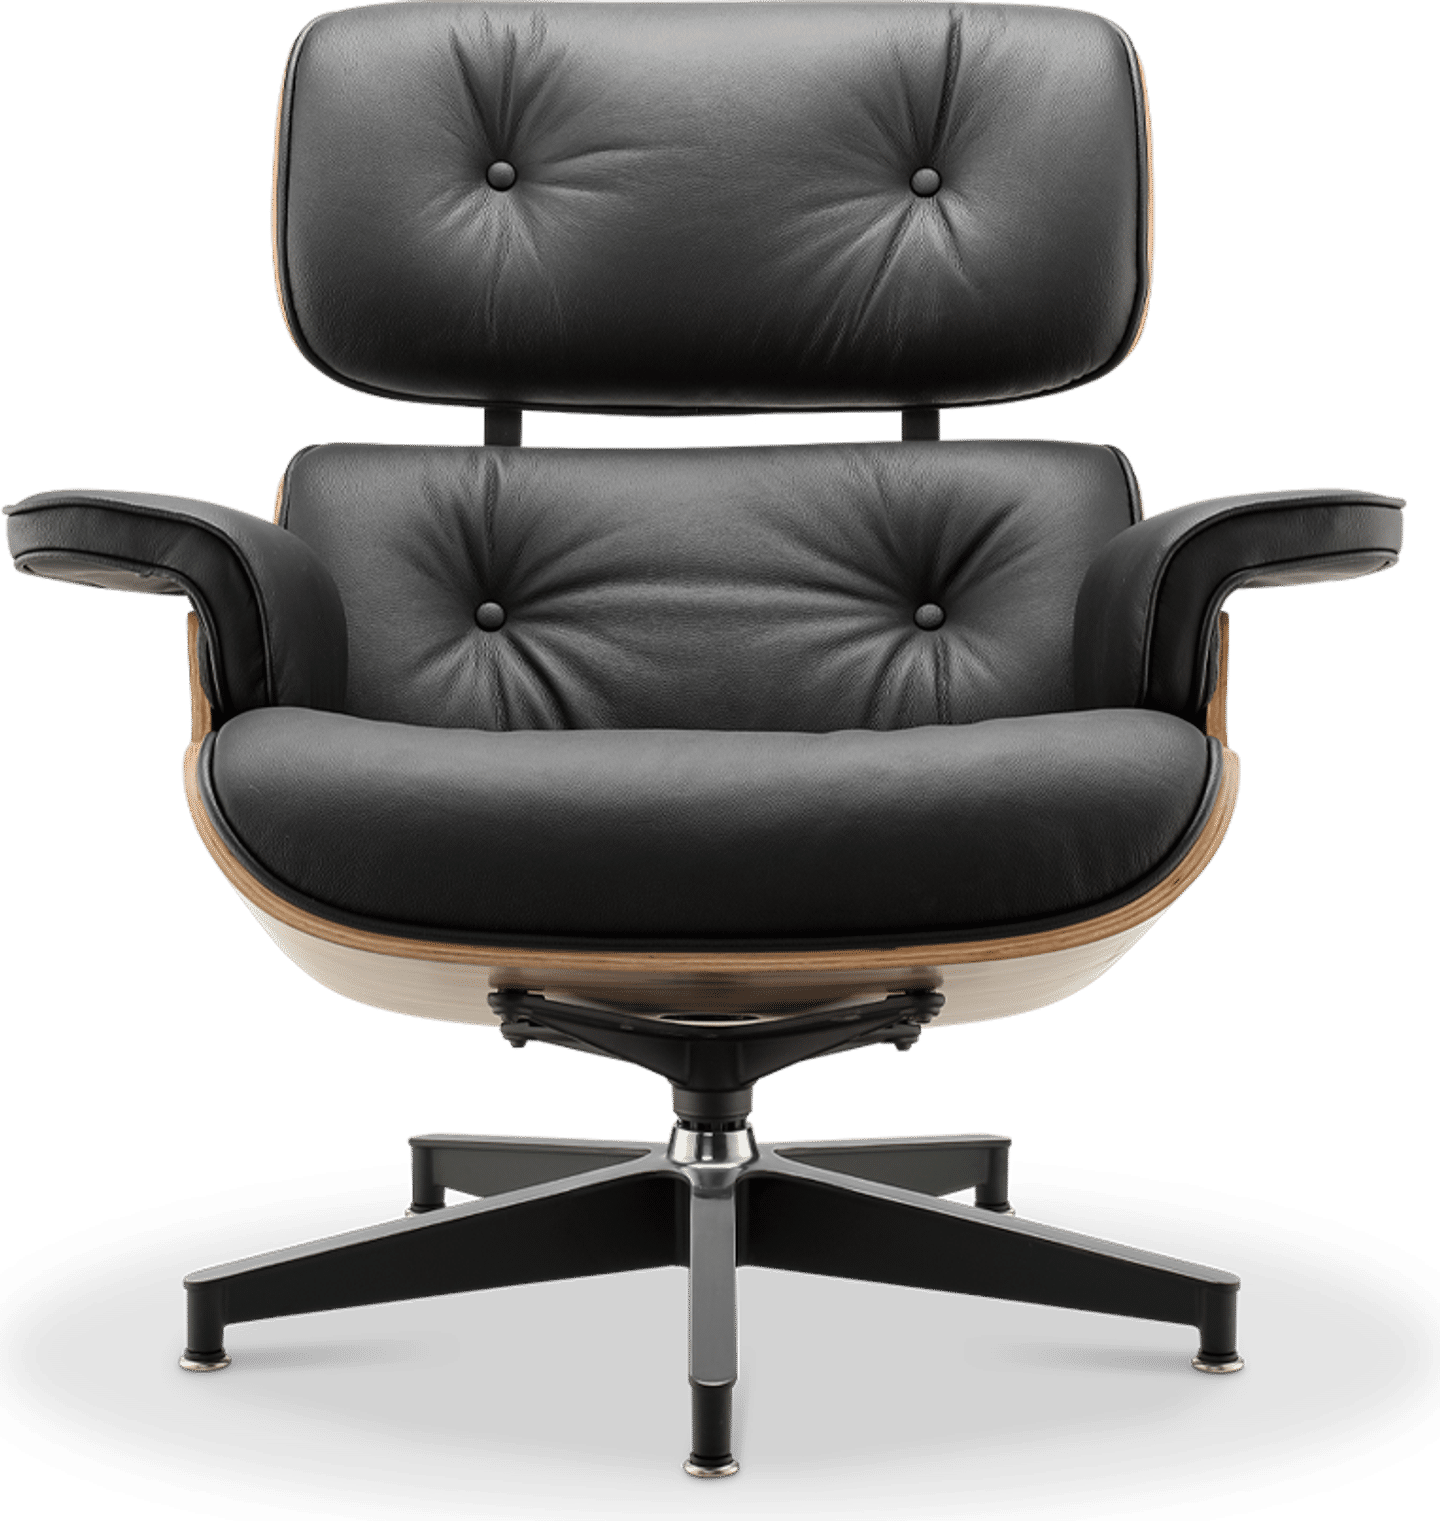 Eames Style Lounge Chair Versión H Miller Italian Leather/Black/Rosewood image.